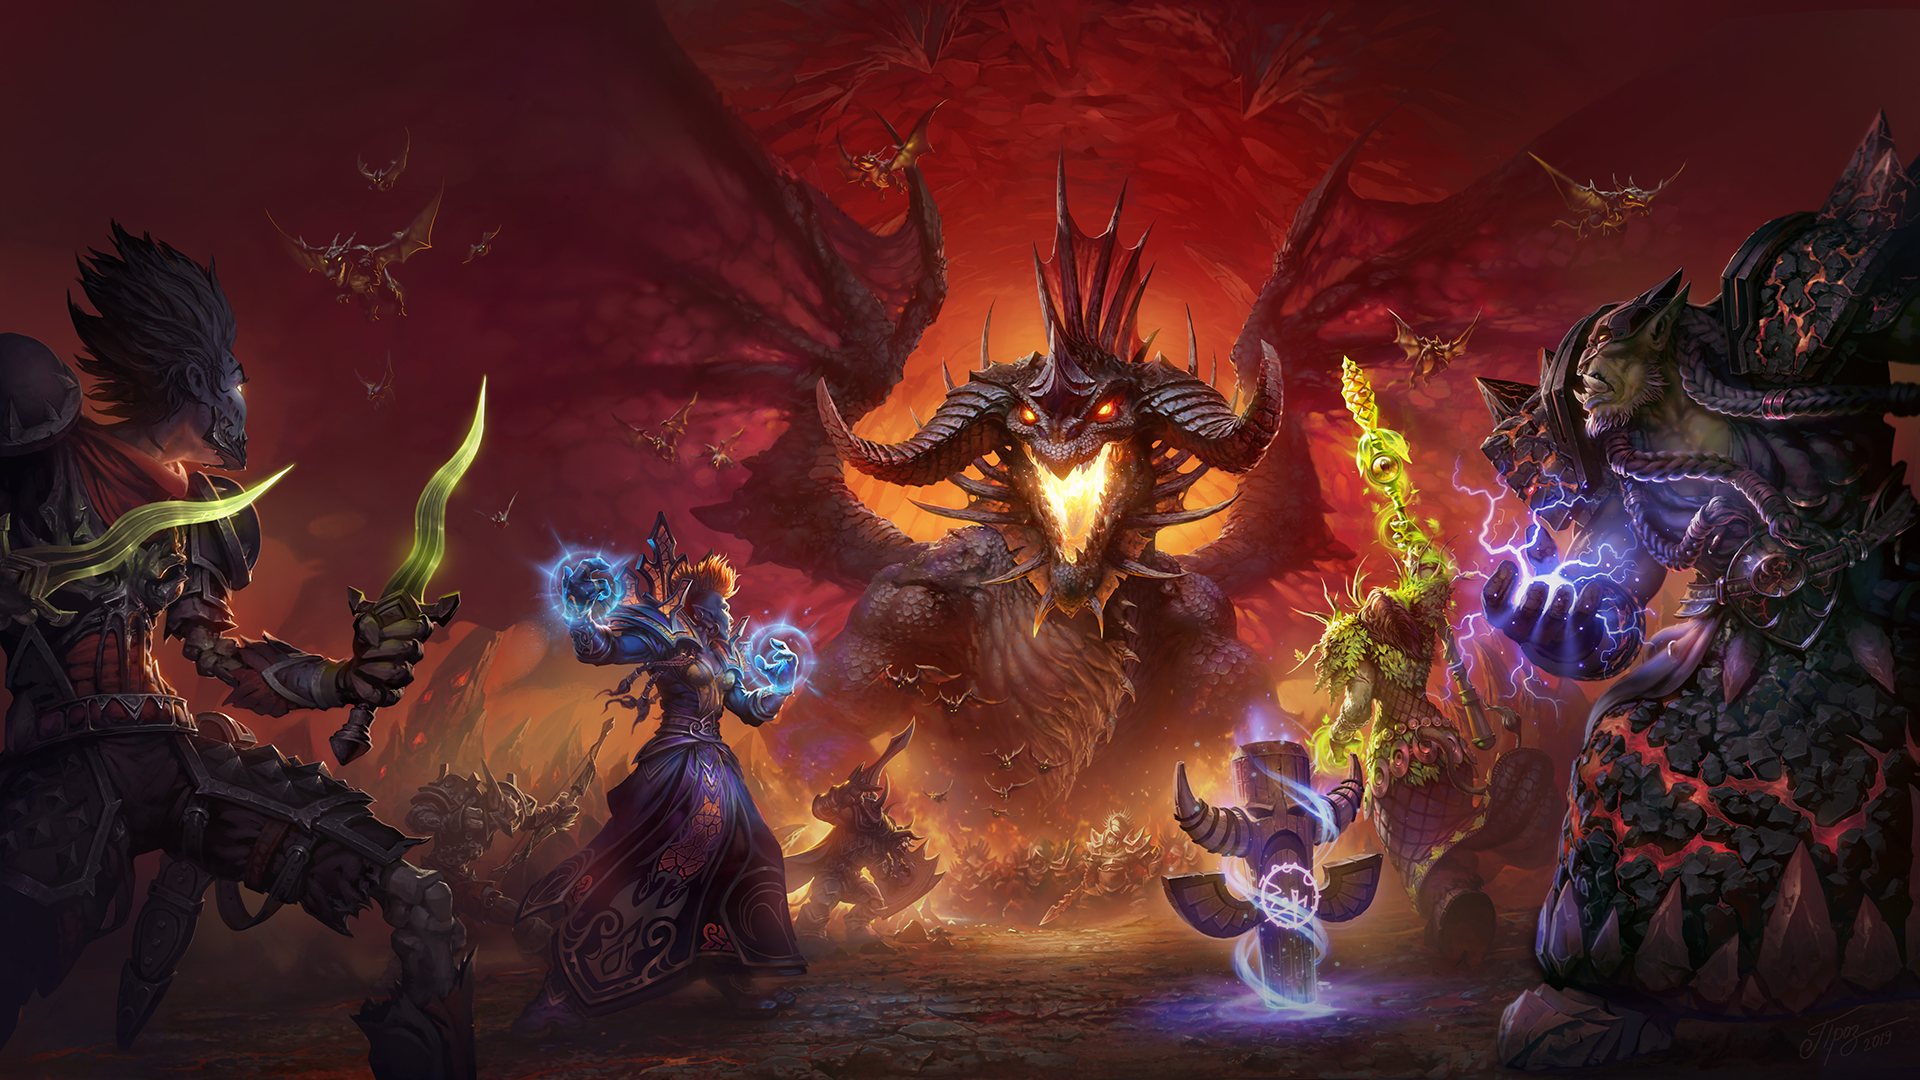 General 1920x1080 Warcraft World of Warcraft artwork MMORPG fantasy art RPG Blizzard Entertainment